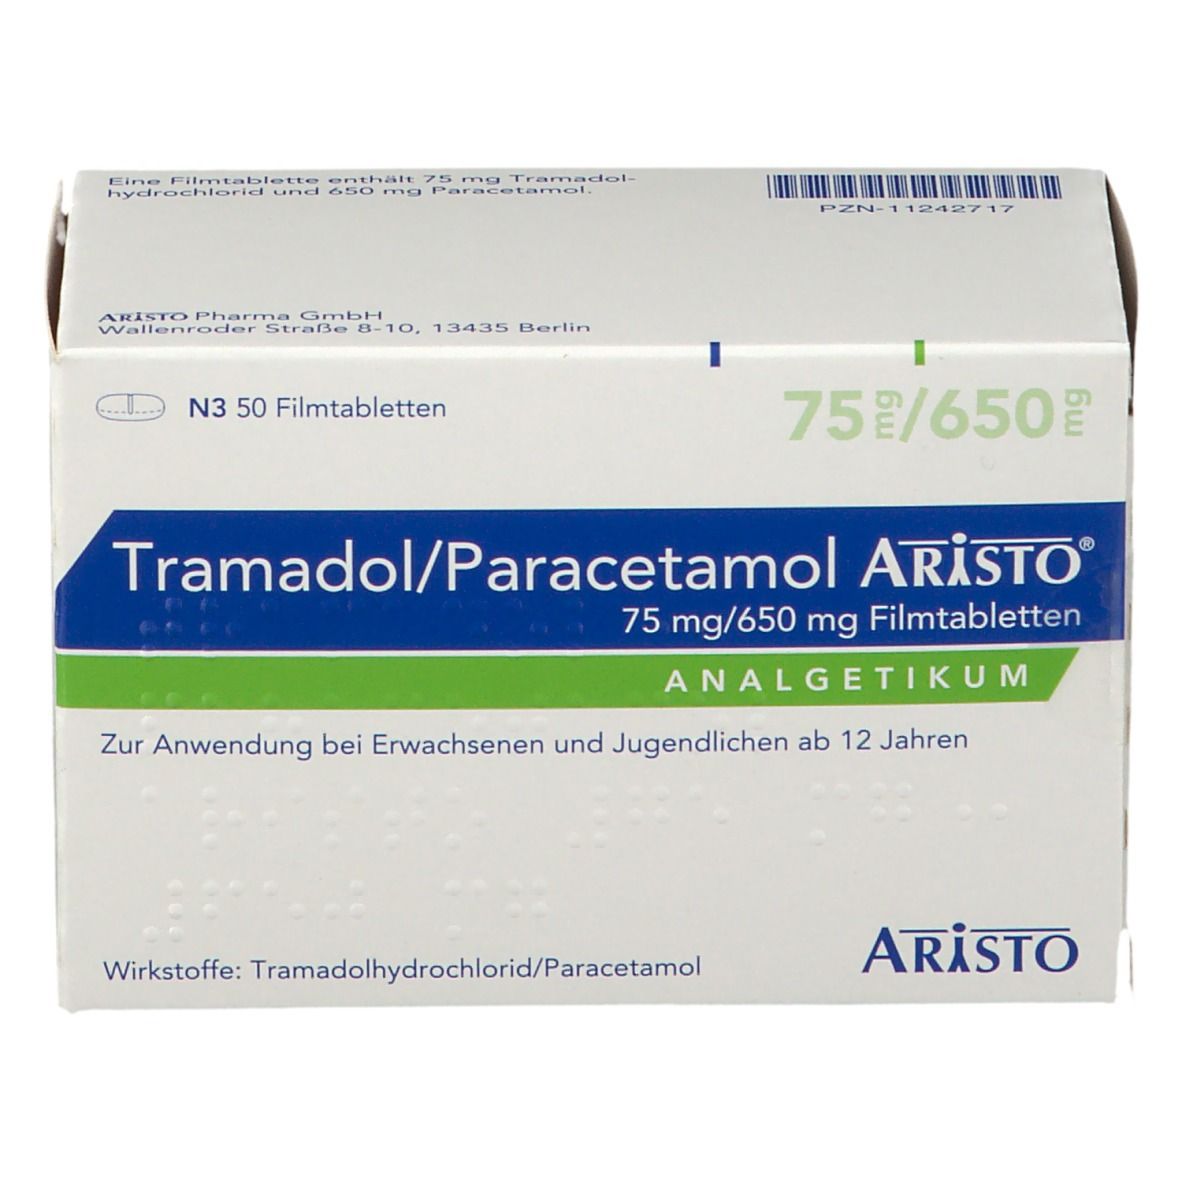 Tramadol/Paracetamol Aristo® 75 mg/650 mg